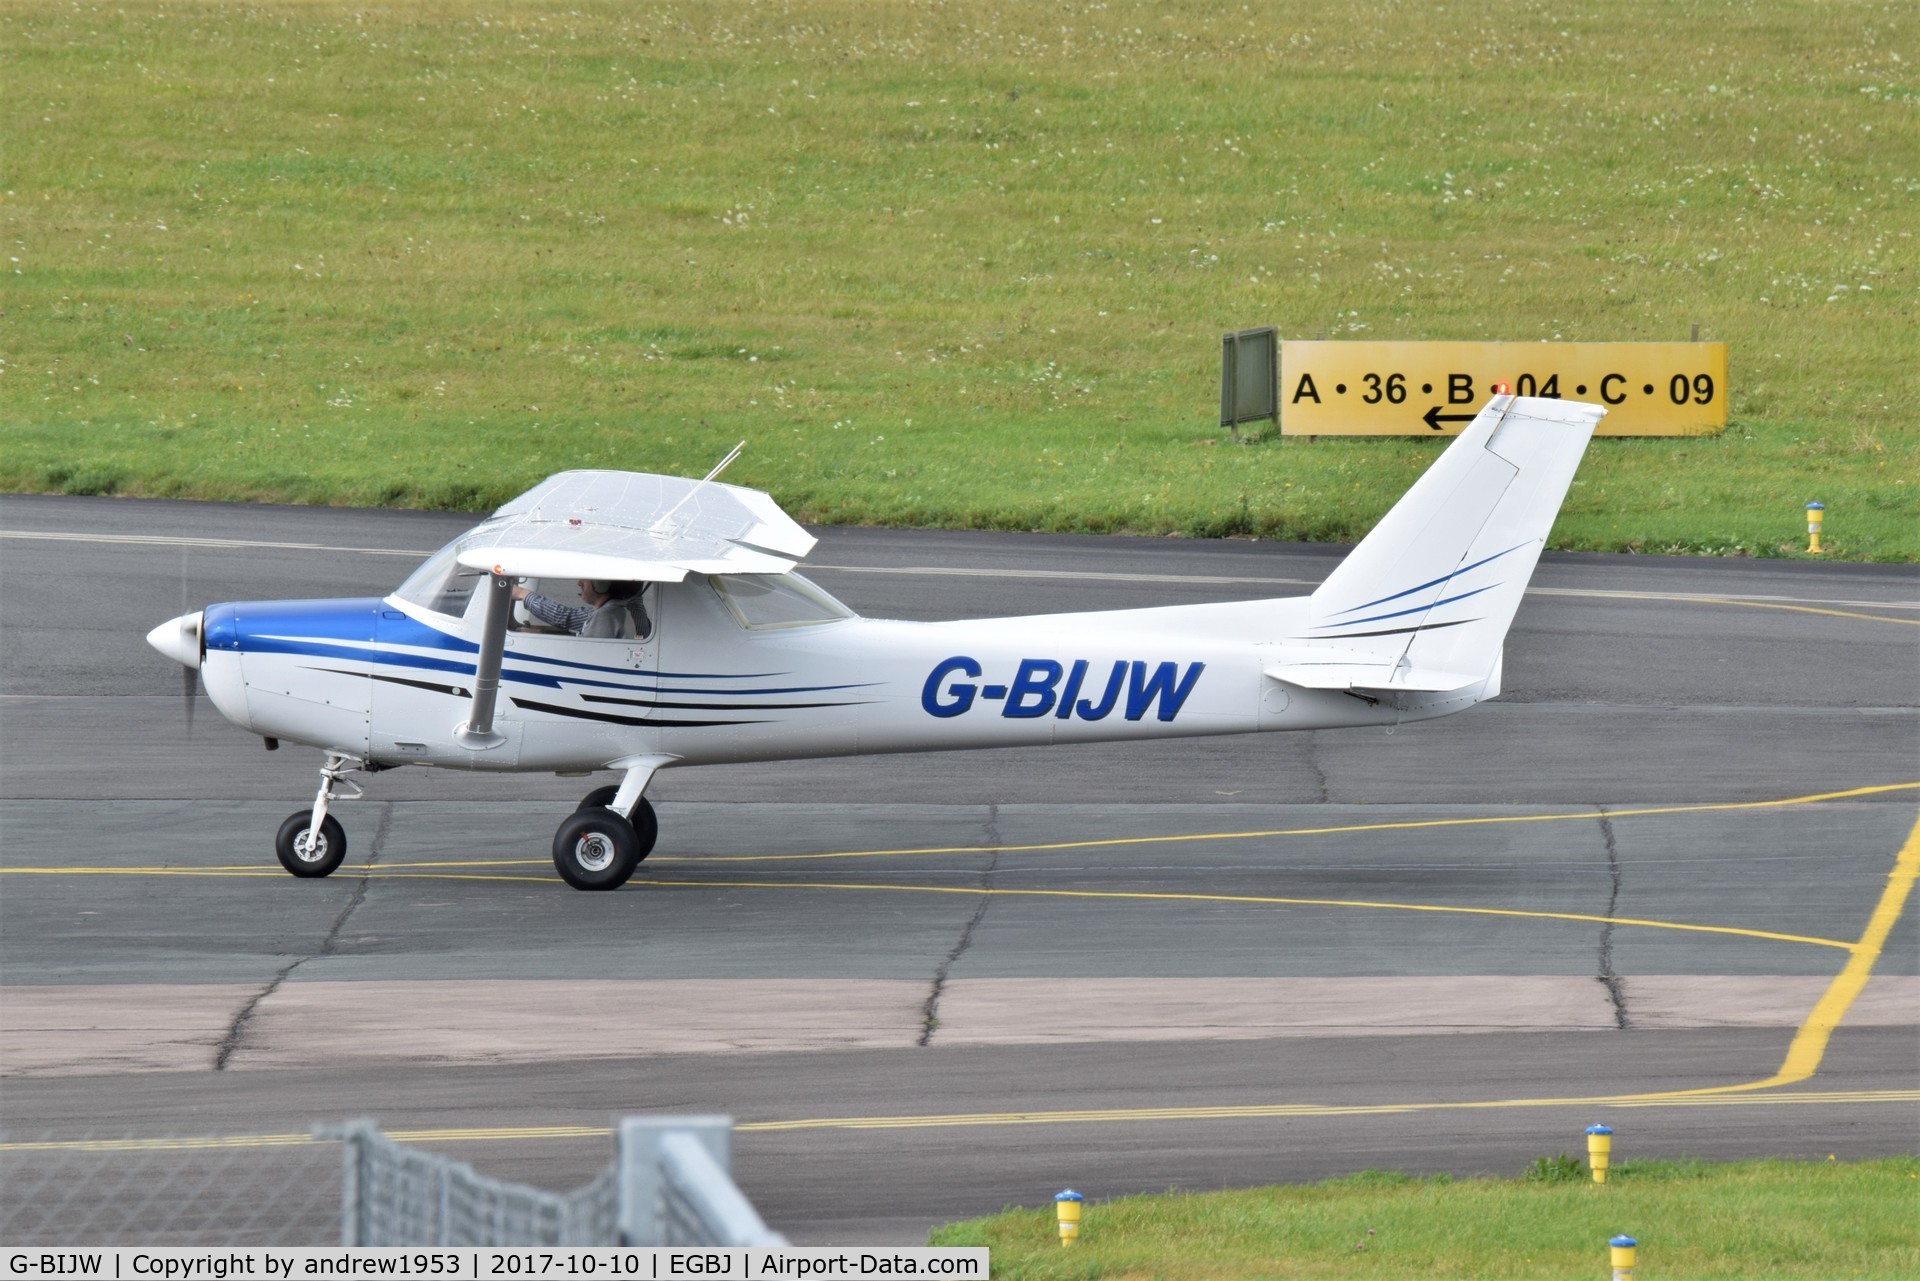 G-BIJW, 1981 Reims F152 C/N 1820, G-BIJW at Gloucestershire Airport.